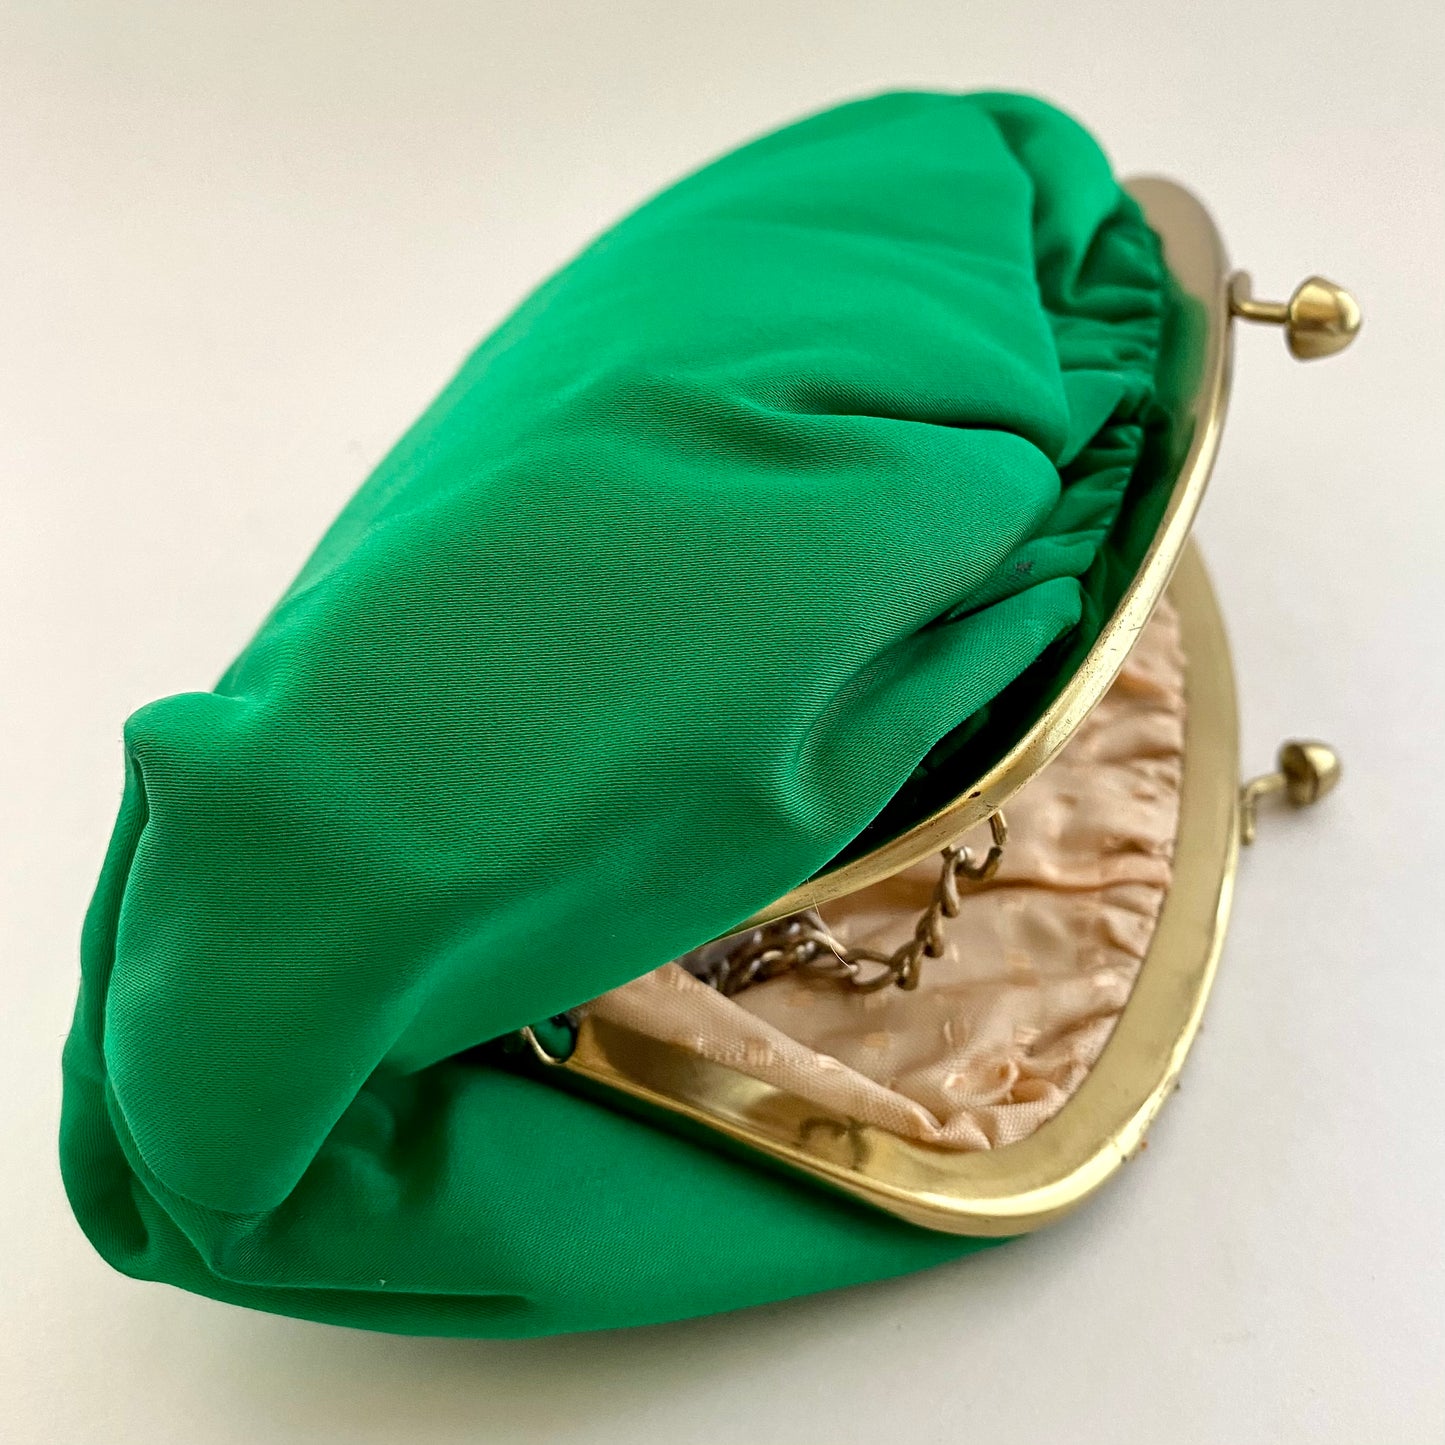 1960s Green Satin Taffeta Fabric Clutch